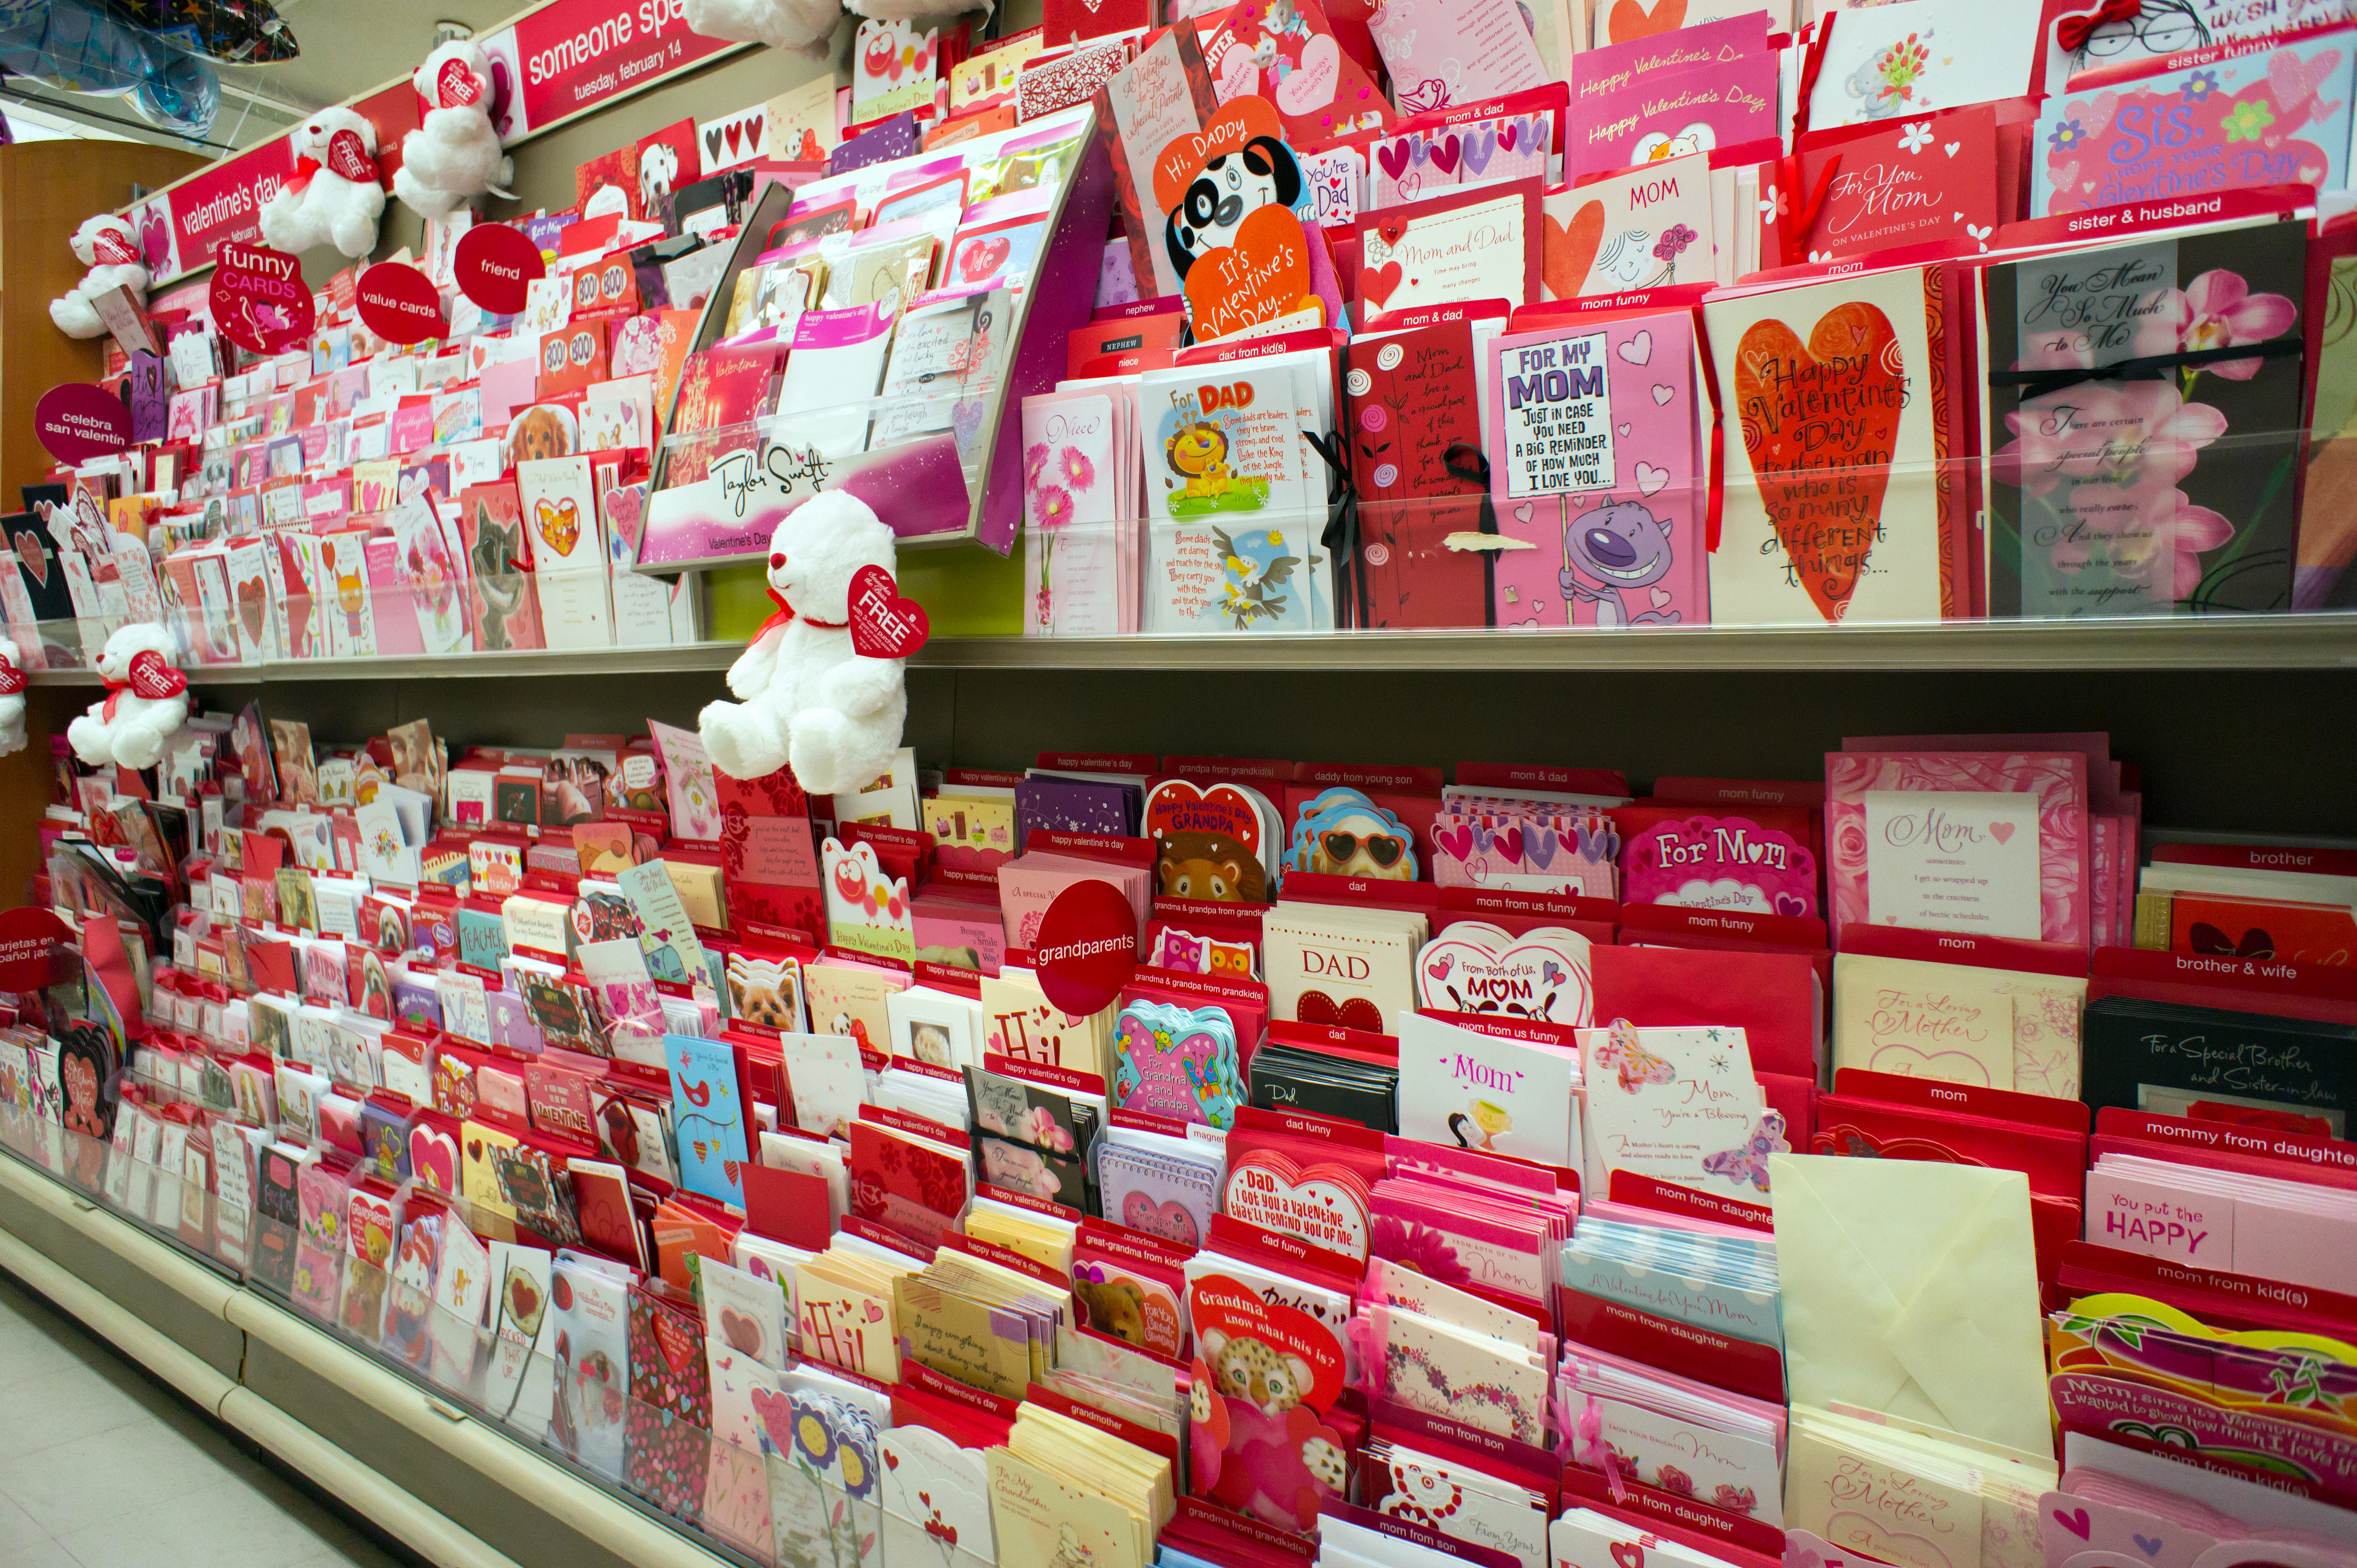 The tragic, unromantic history of Valentine's Day